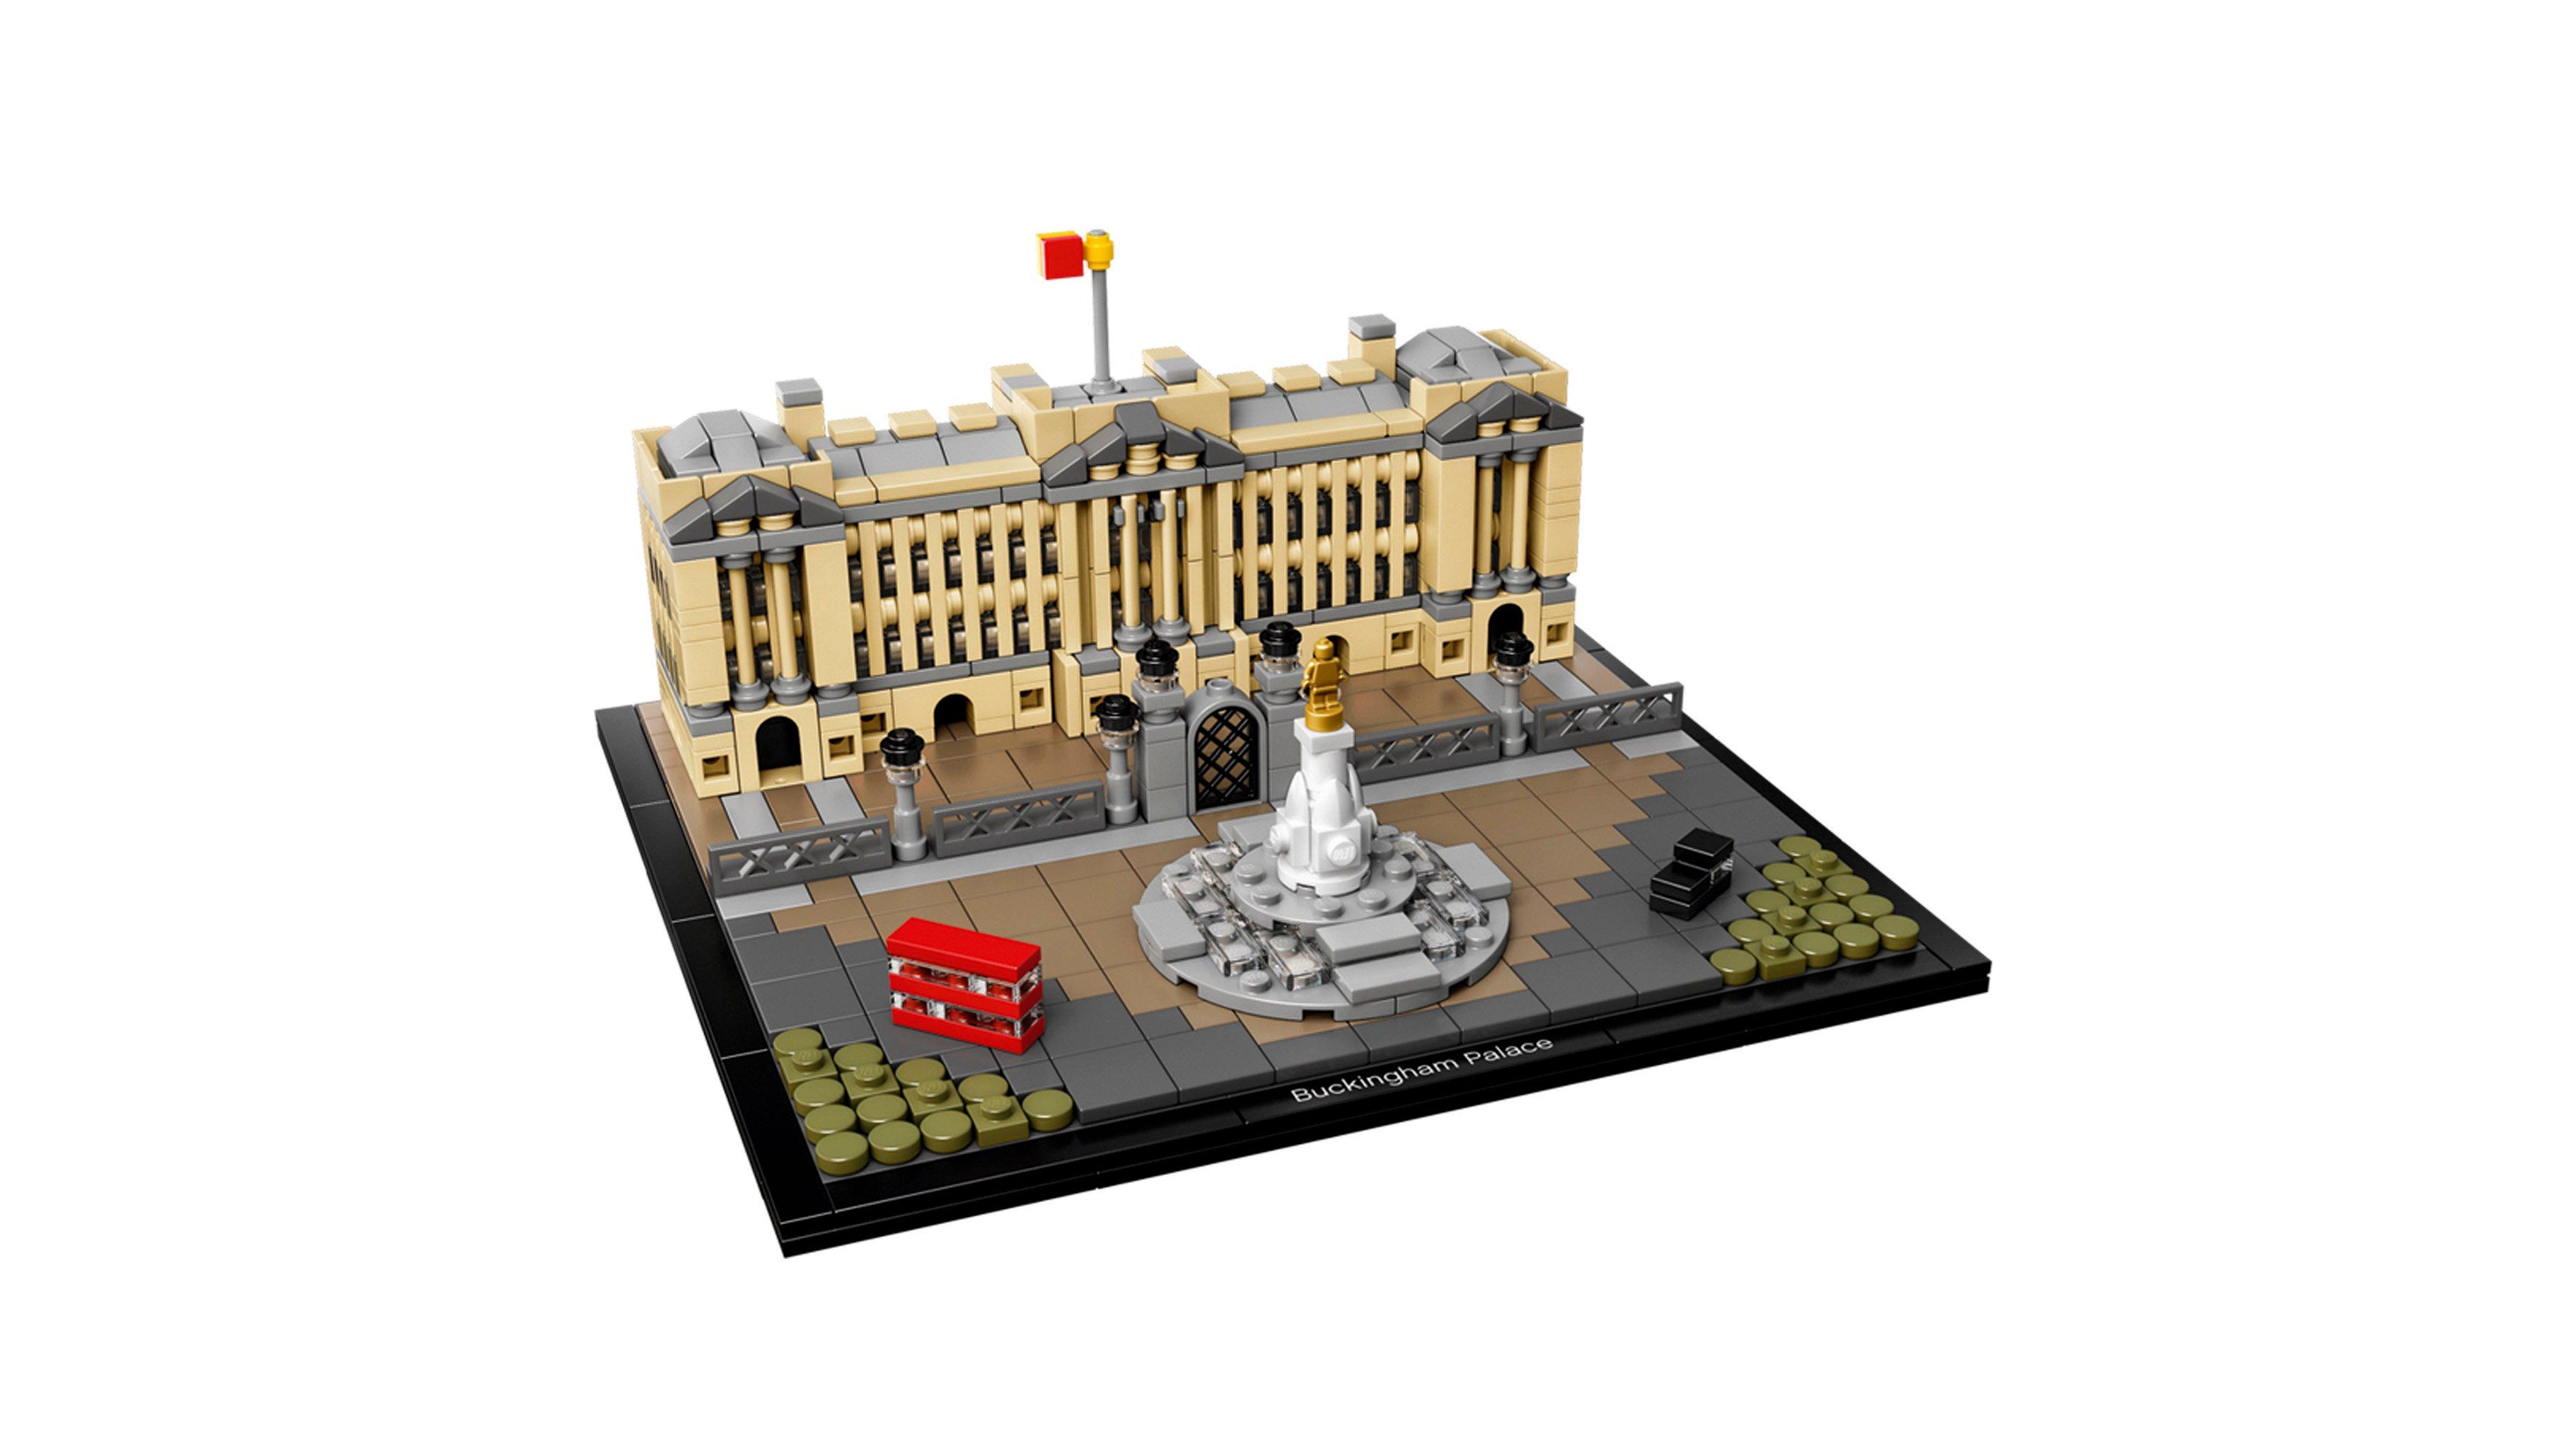 LEGO®  21029 Le palais de Buckingham 